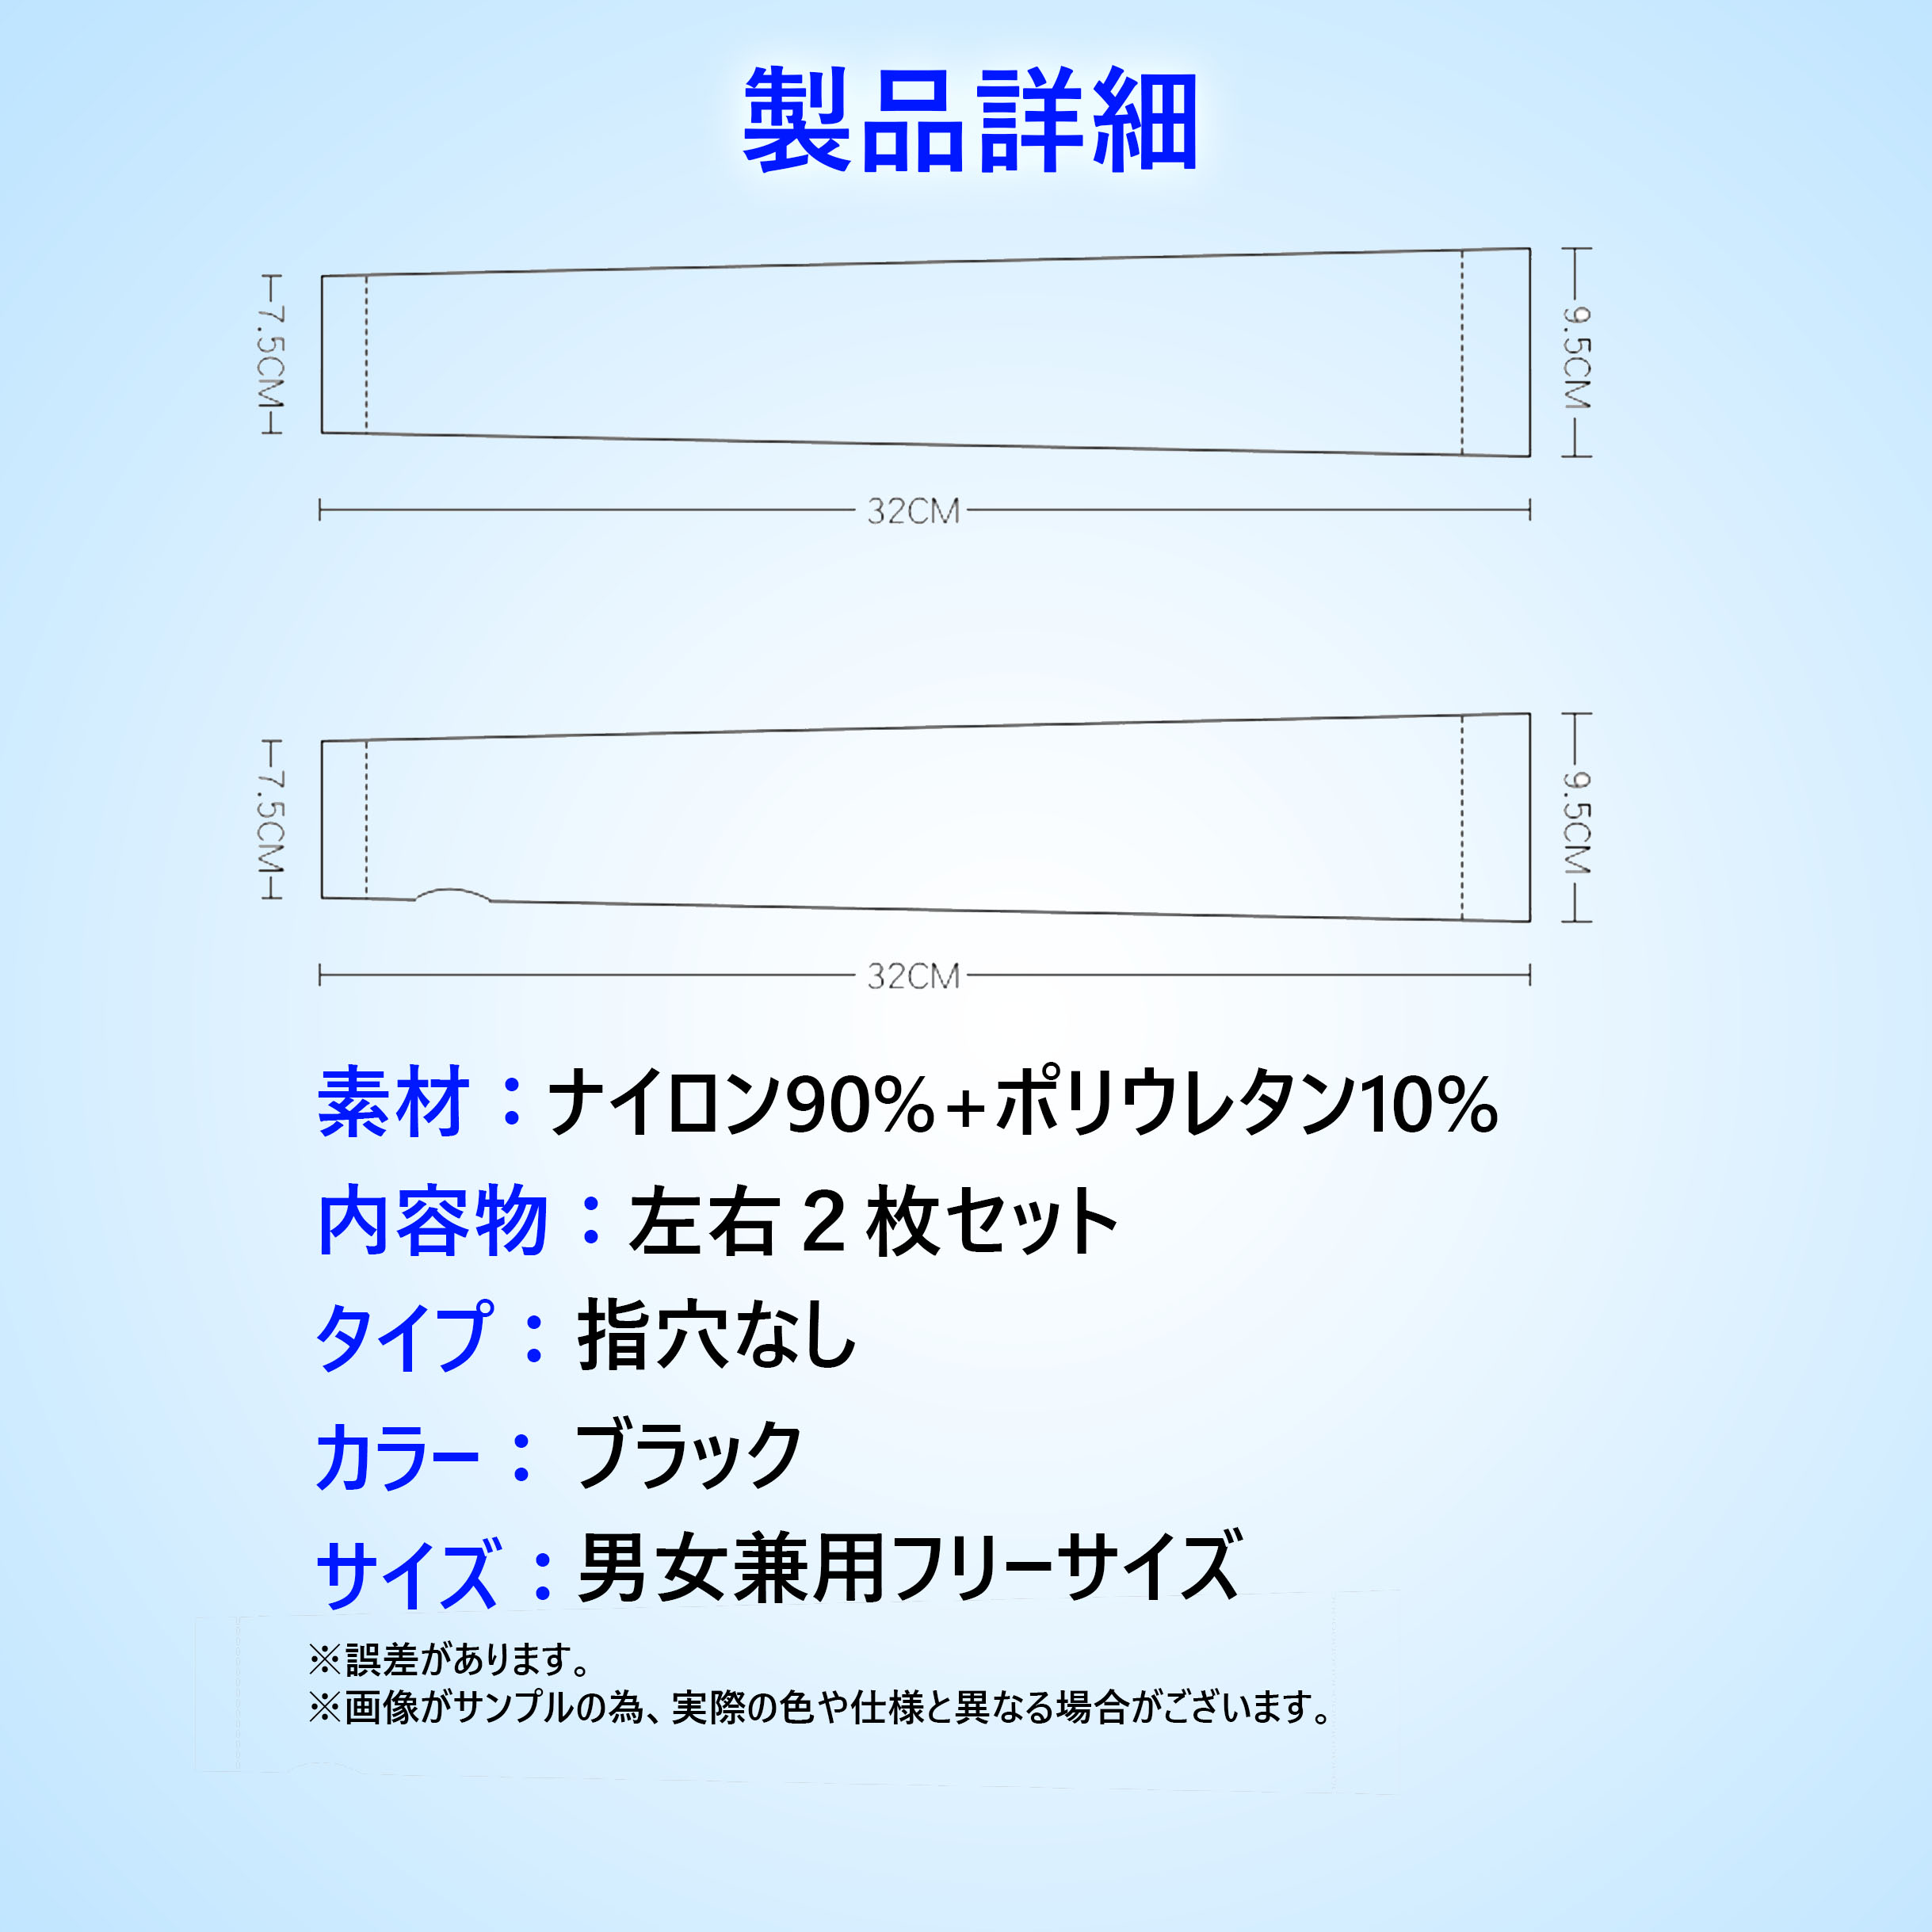 SALE／94%OFF】 冷感アームカバー 2枚セット UVカット 日焼け防止 男女兼用